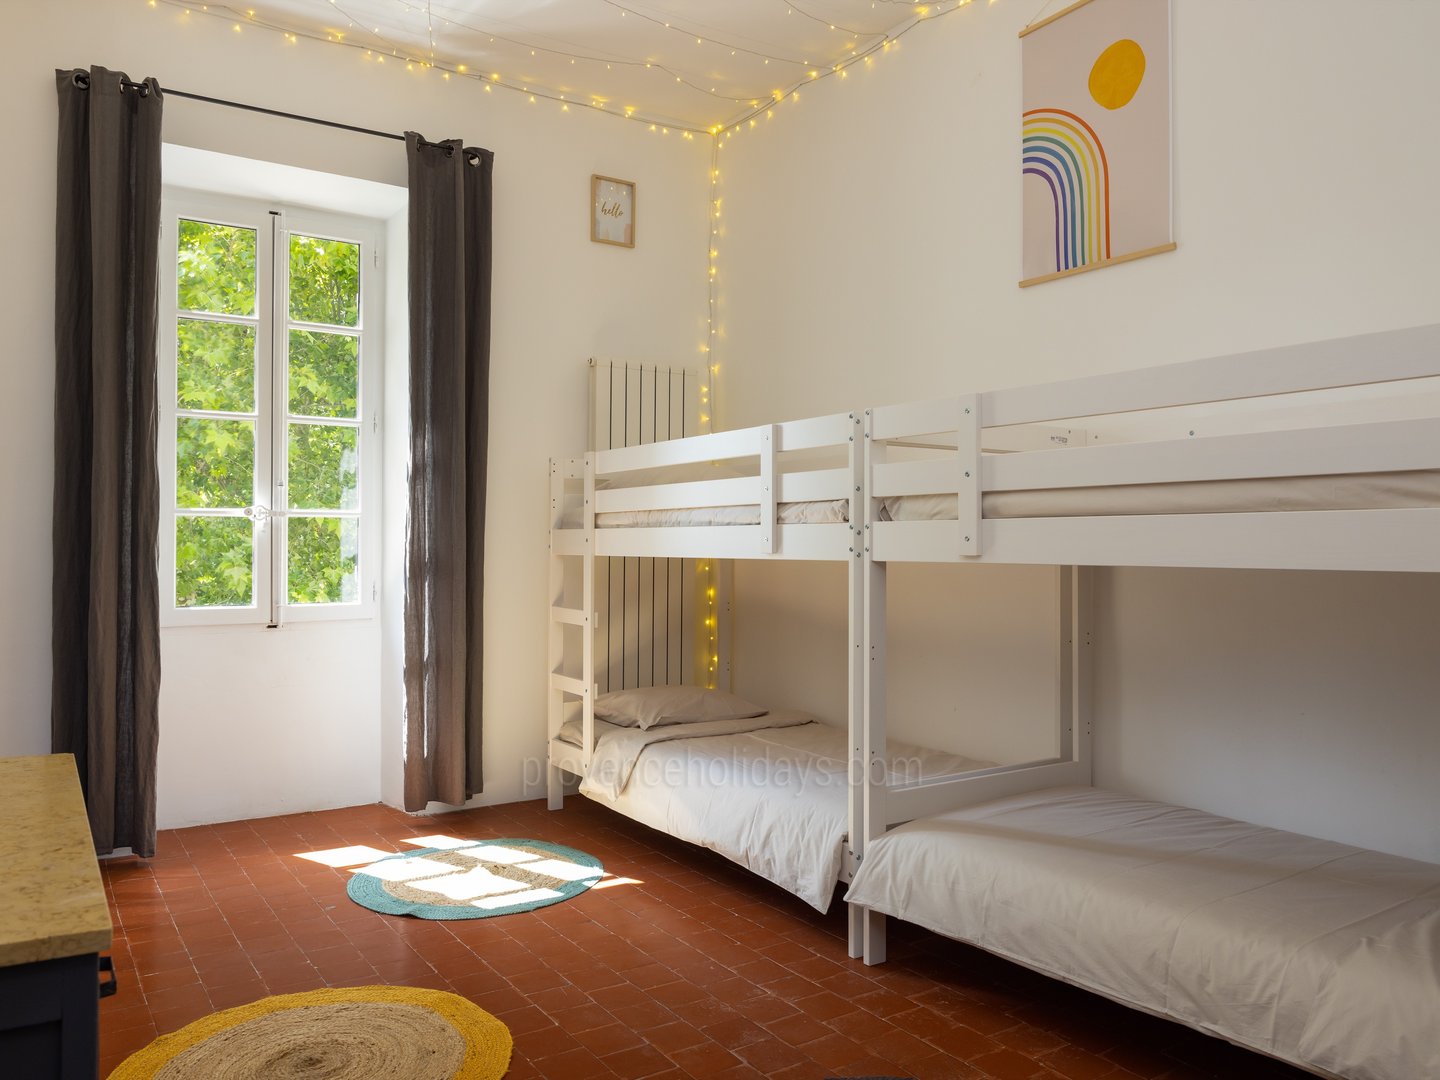 41 - Petite Bastide de Goult: Villa: Bedroom - Petite Ourse